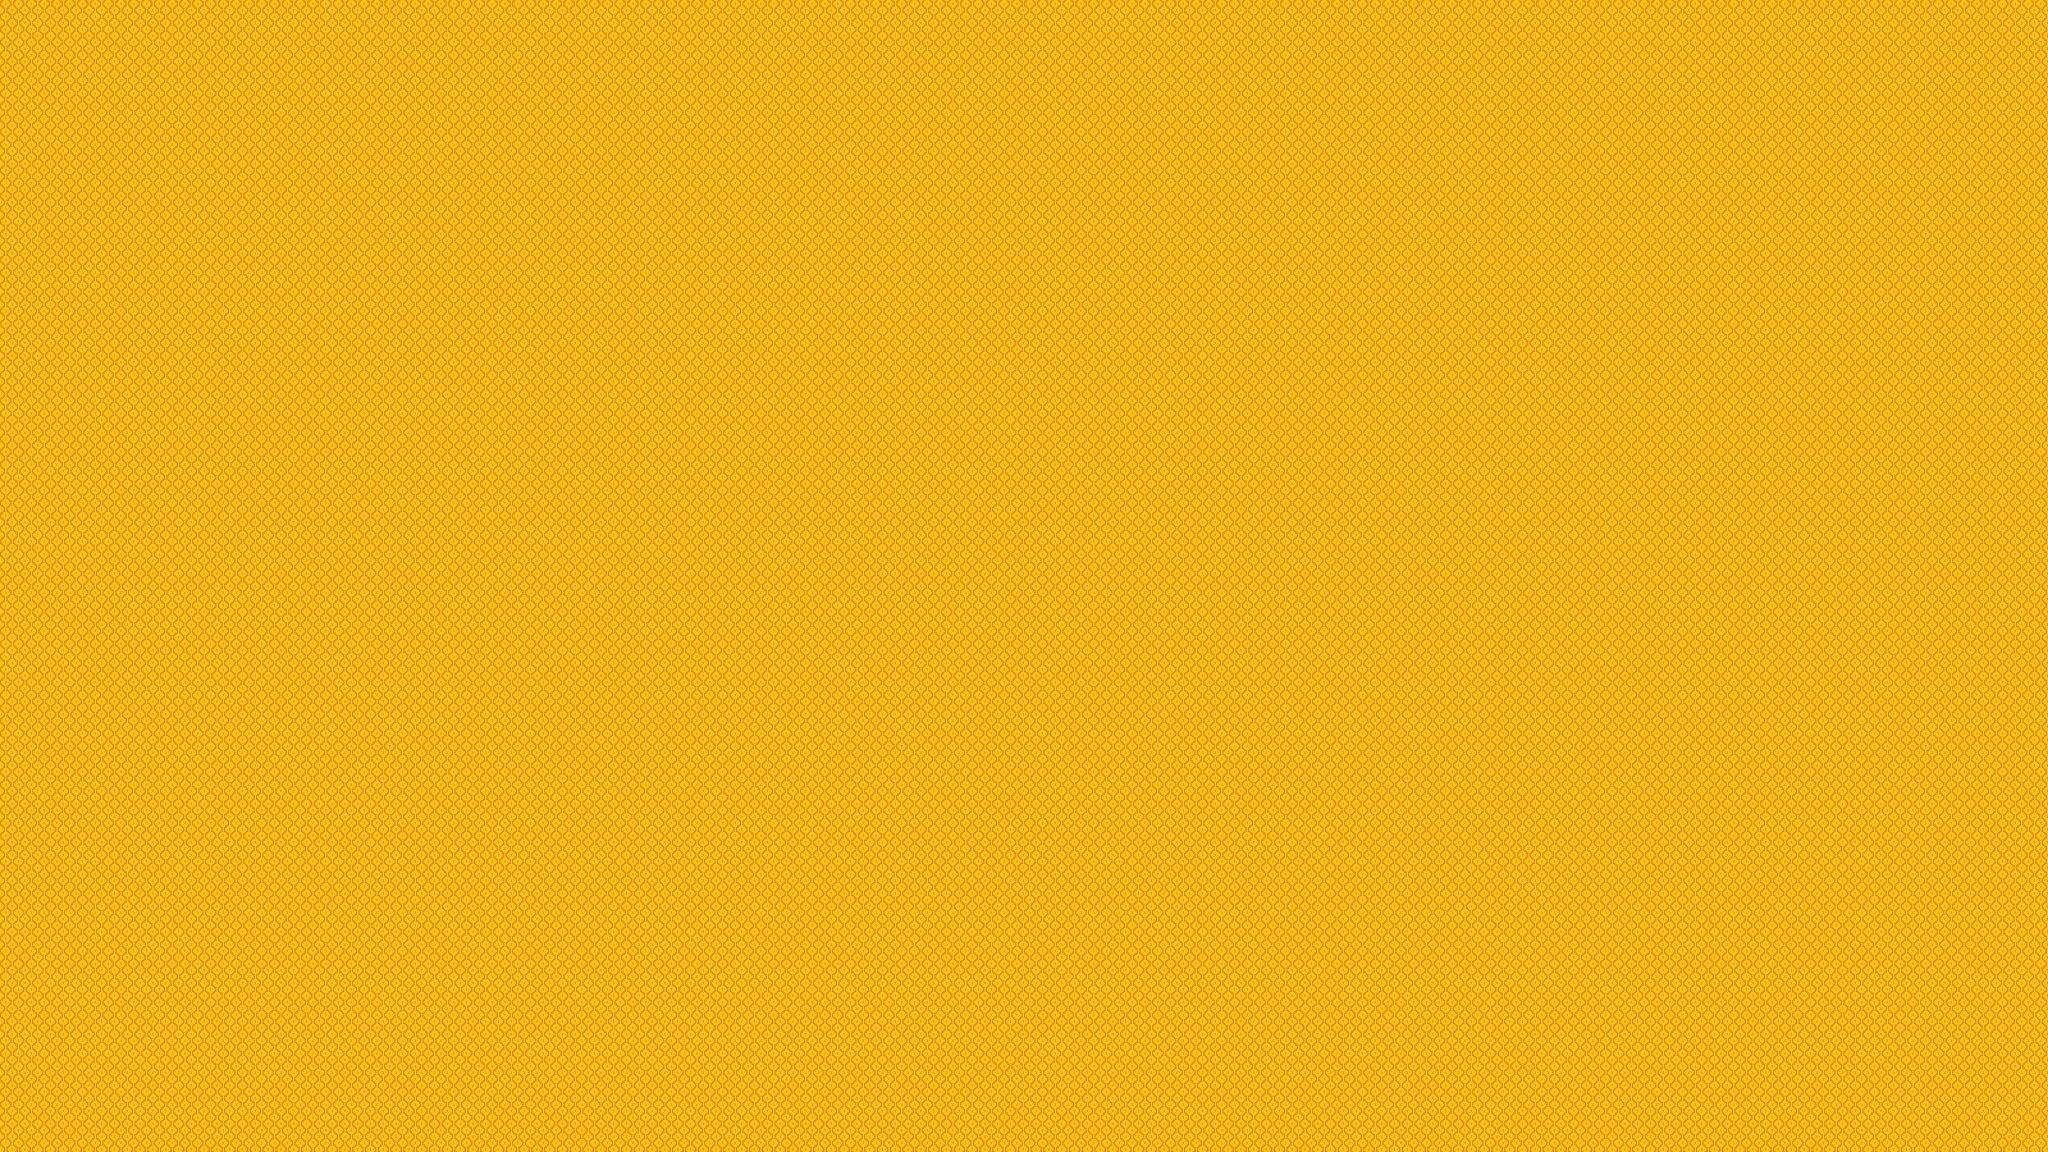 2048x1152 yellow wallpaper full hd |  | 977 kB by Seldon Black